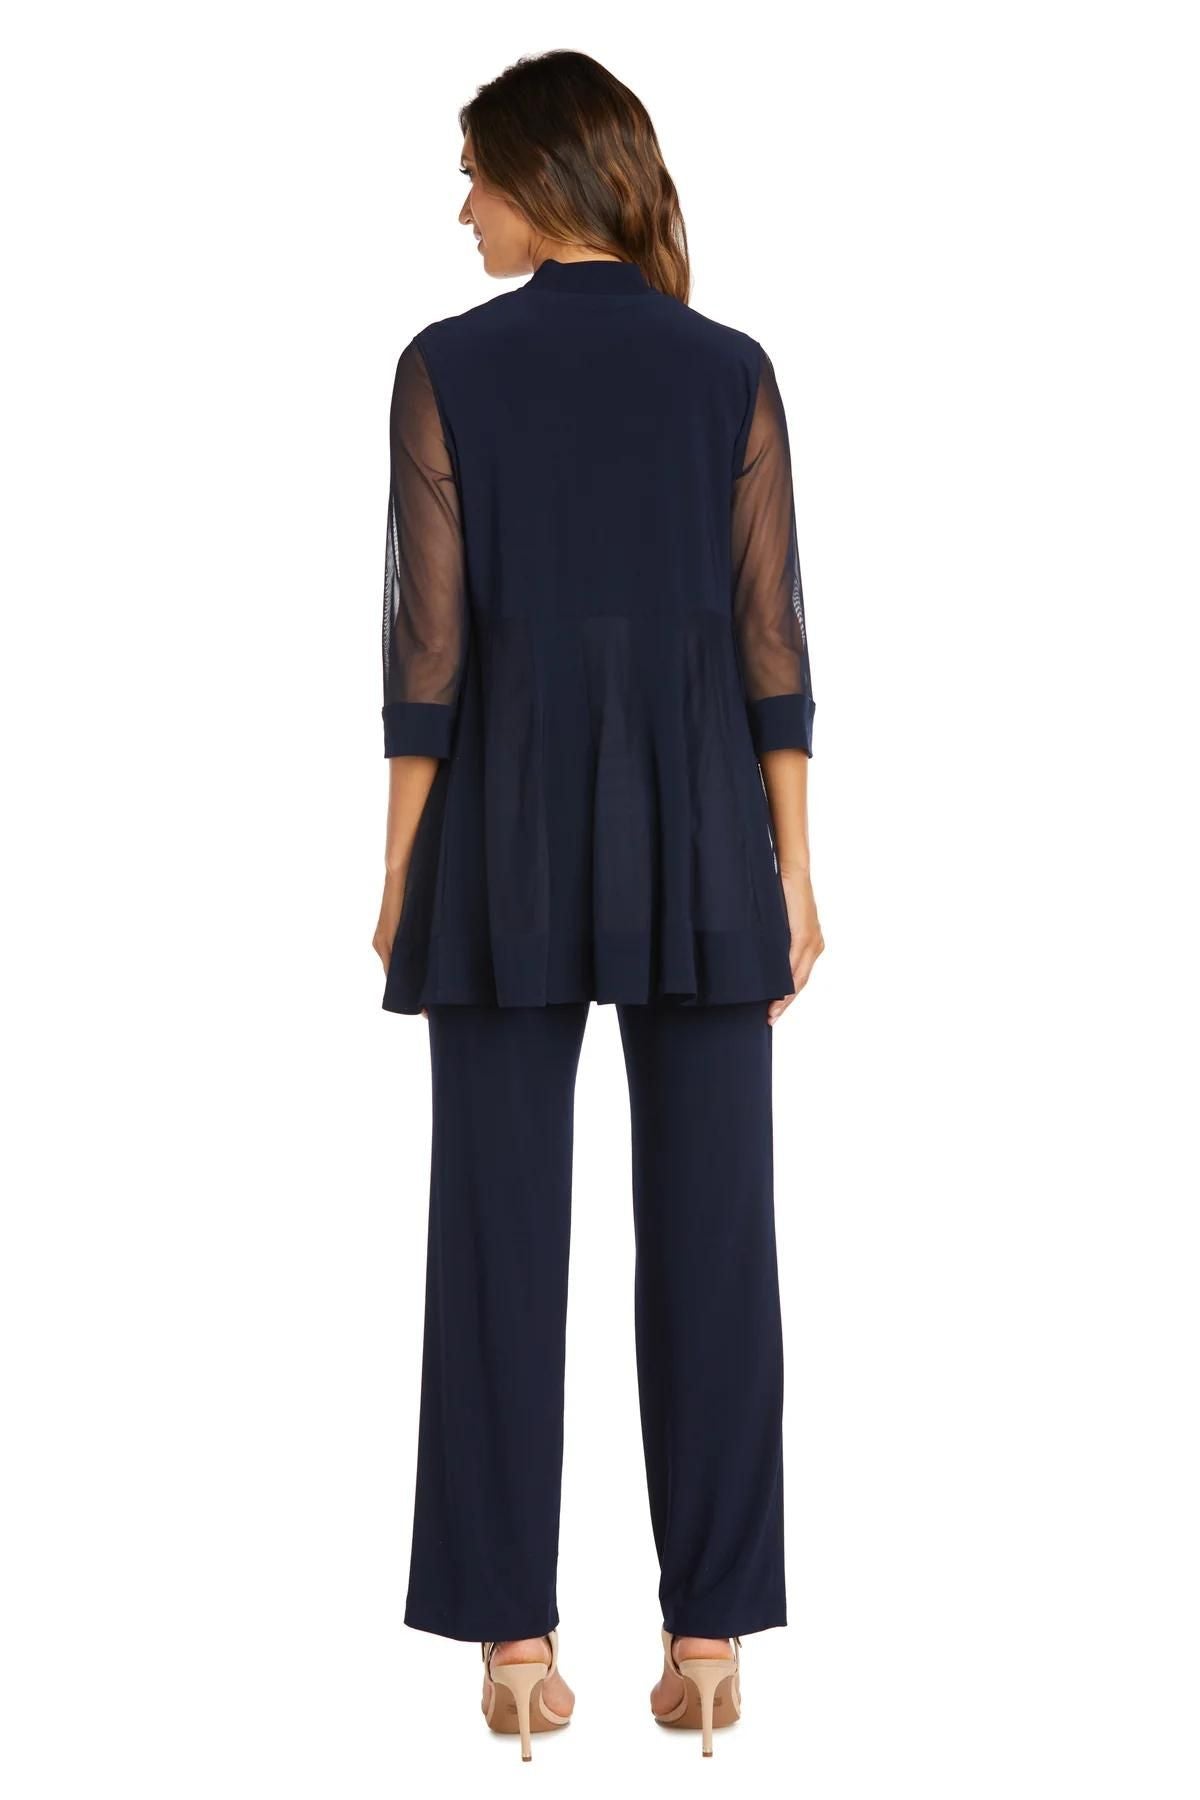 R&M Richards 8998W Plus Size Formal Pants Suit for $79.99 – The Dress Outlet